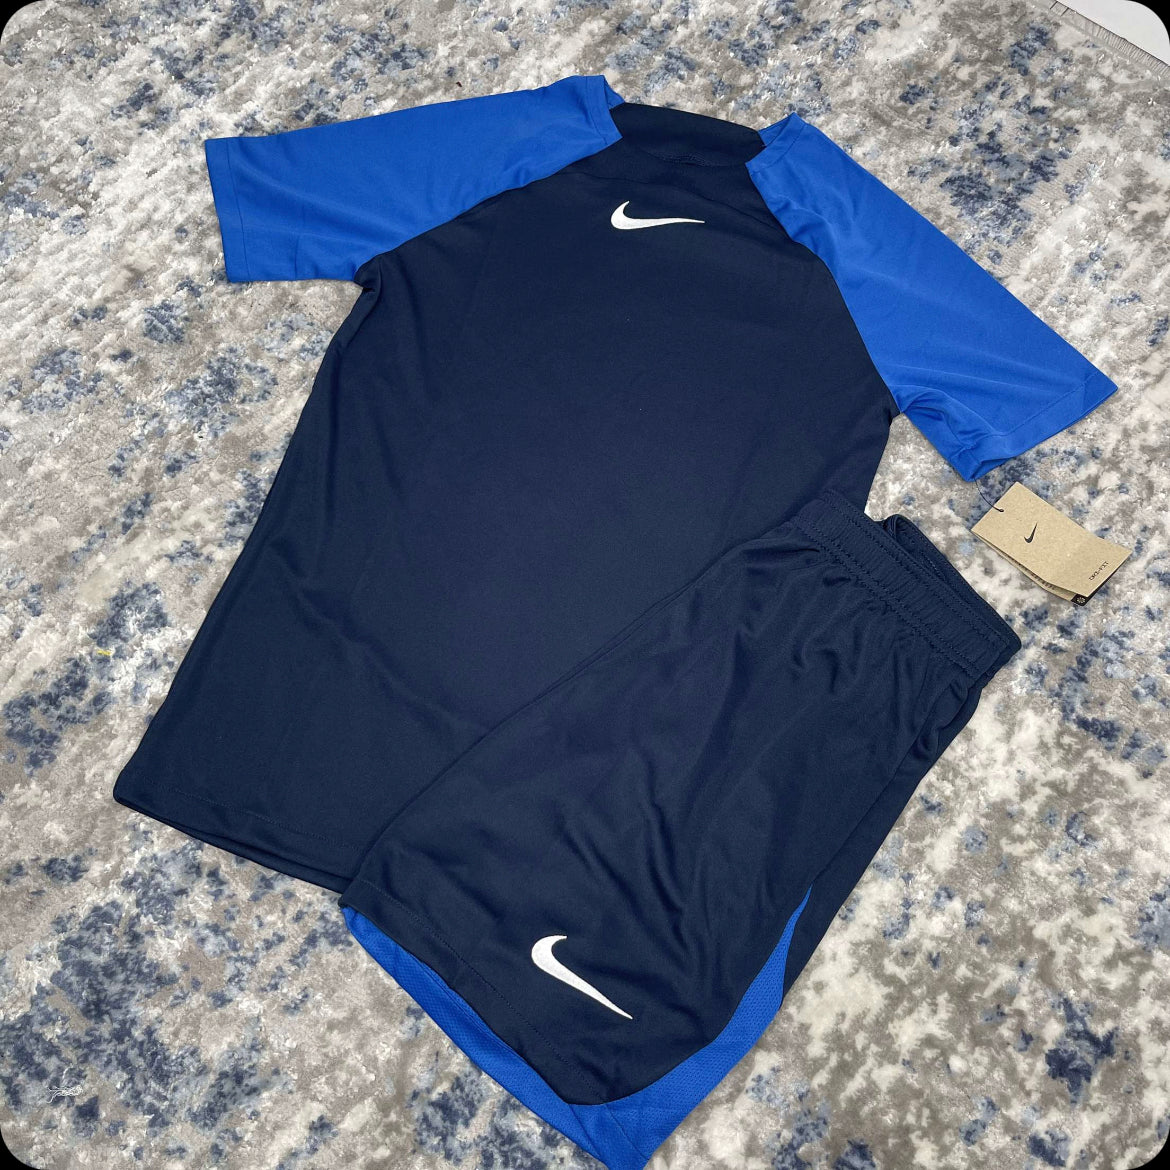 Nike Academy “Blue/Navy